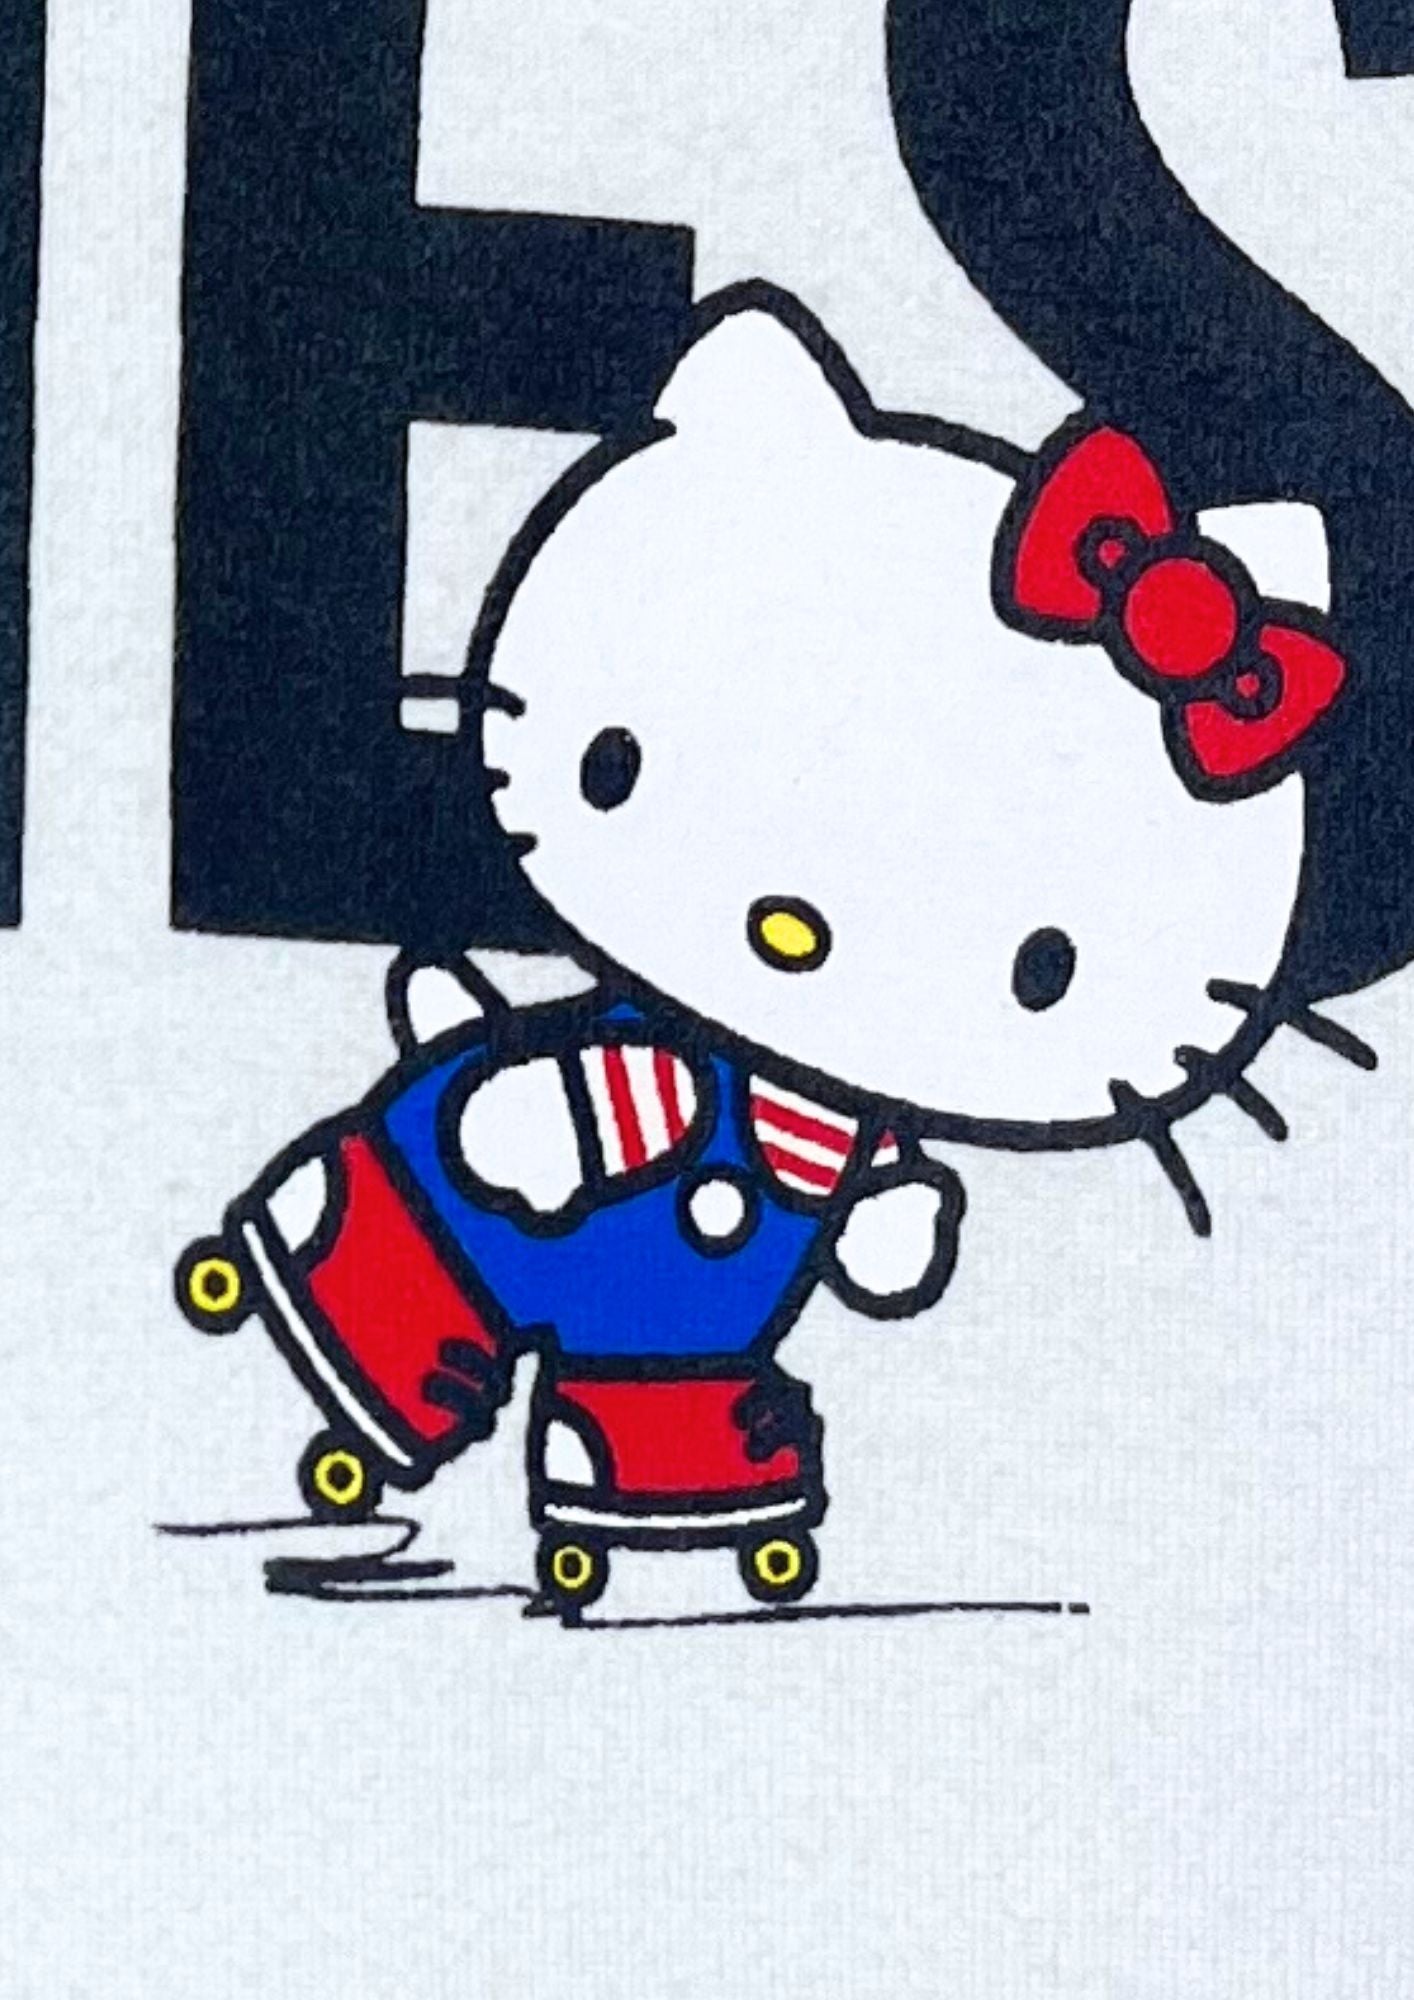 2017 Hello Kitty x Dickies Rollerskating Kitty T-shirt